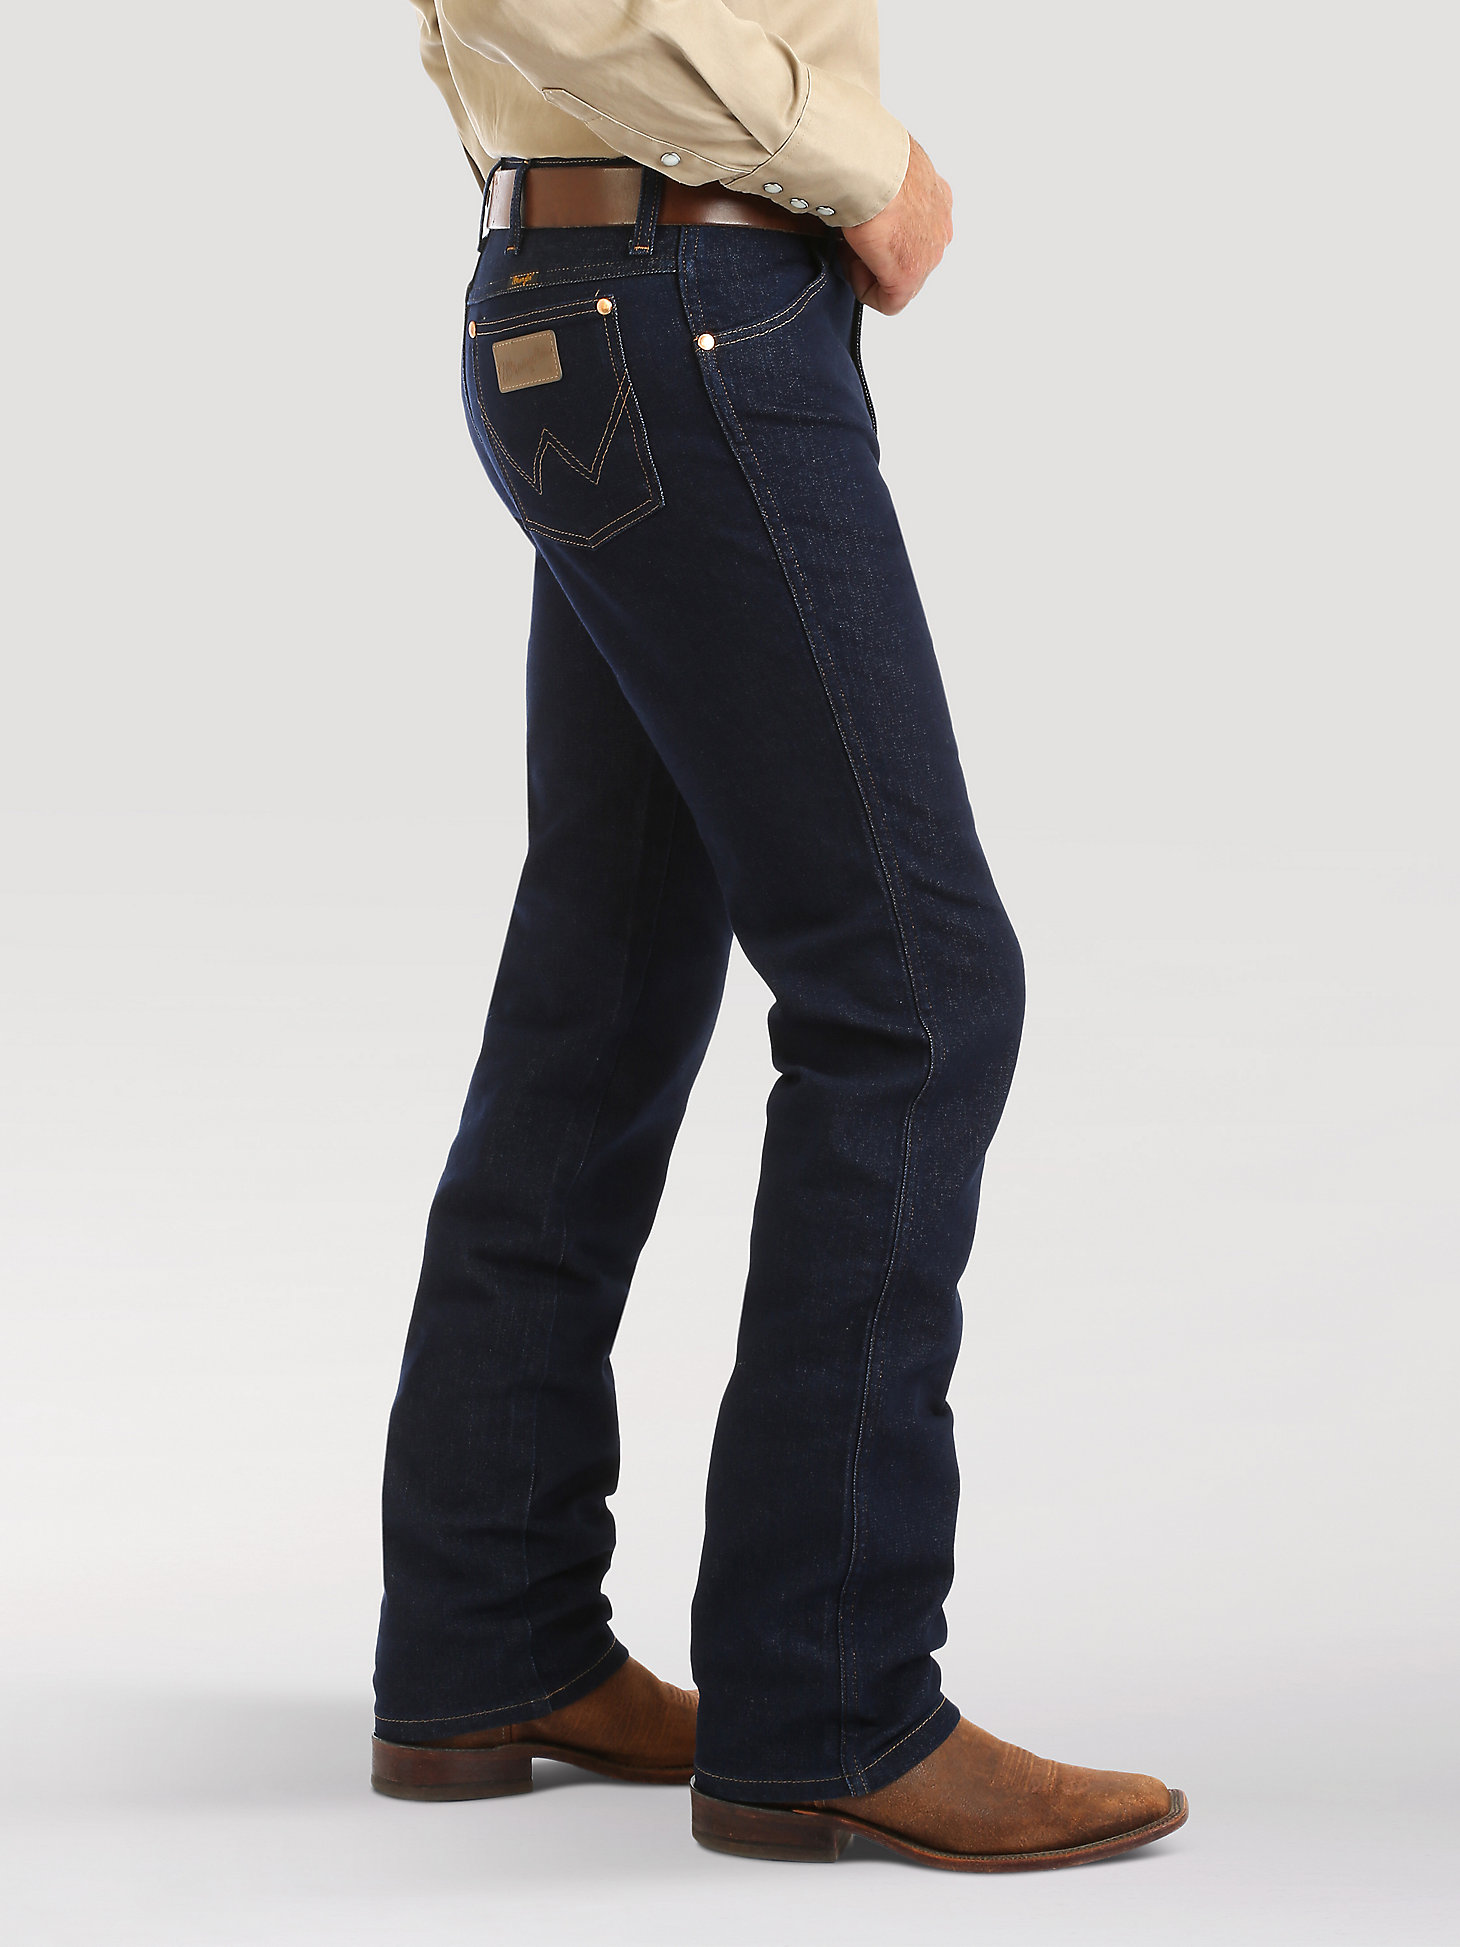 Wrangler® Cowboy Cut® Original Fit Active Flex Jeans in Prewashed Indigo alternative view 2